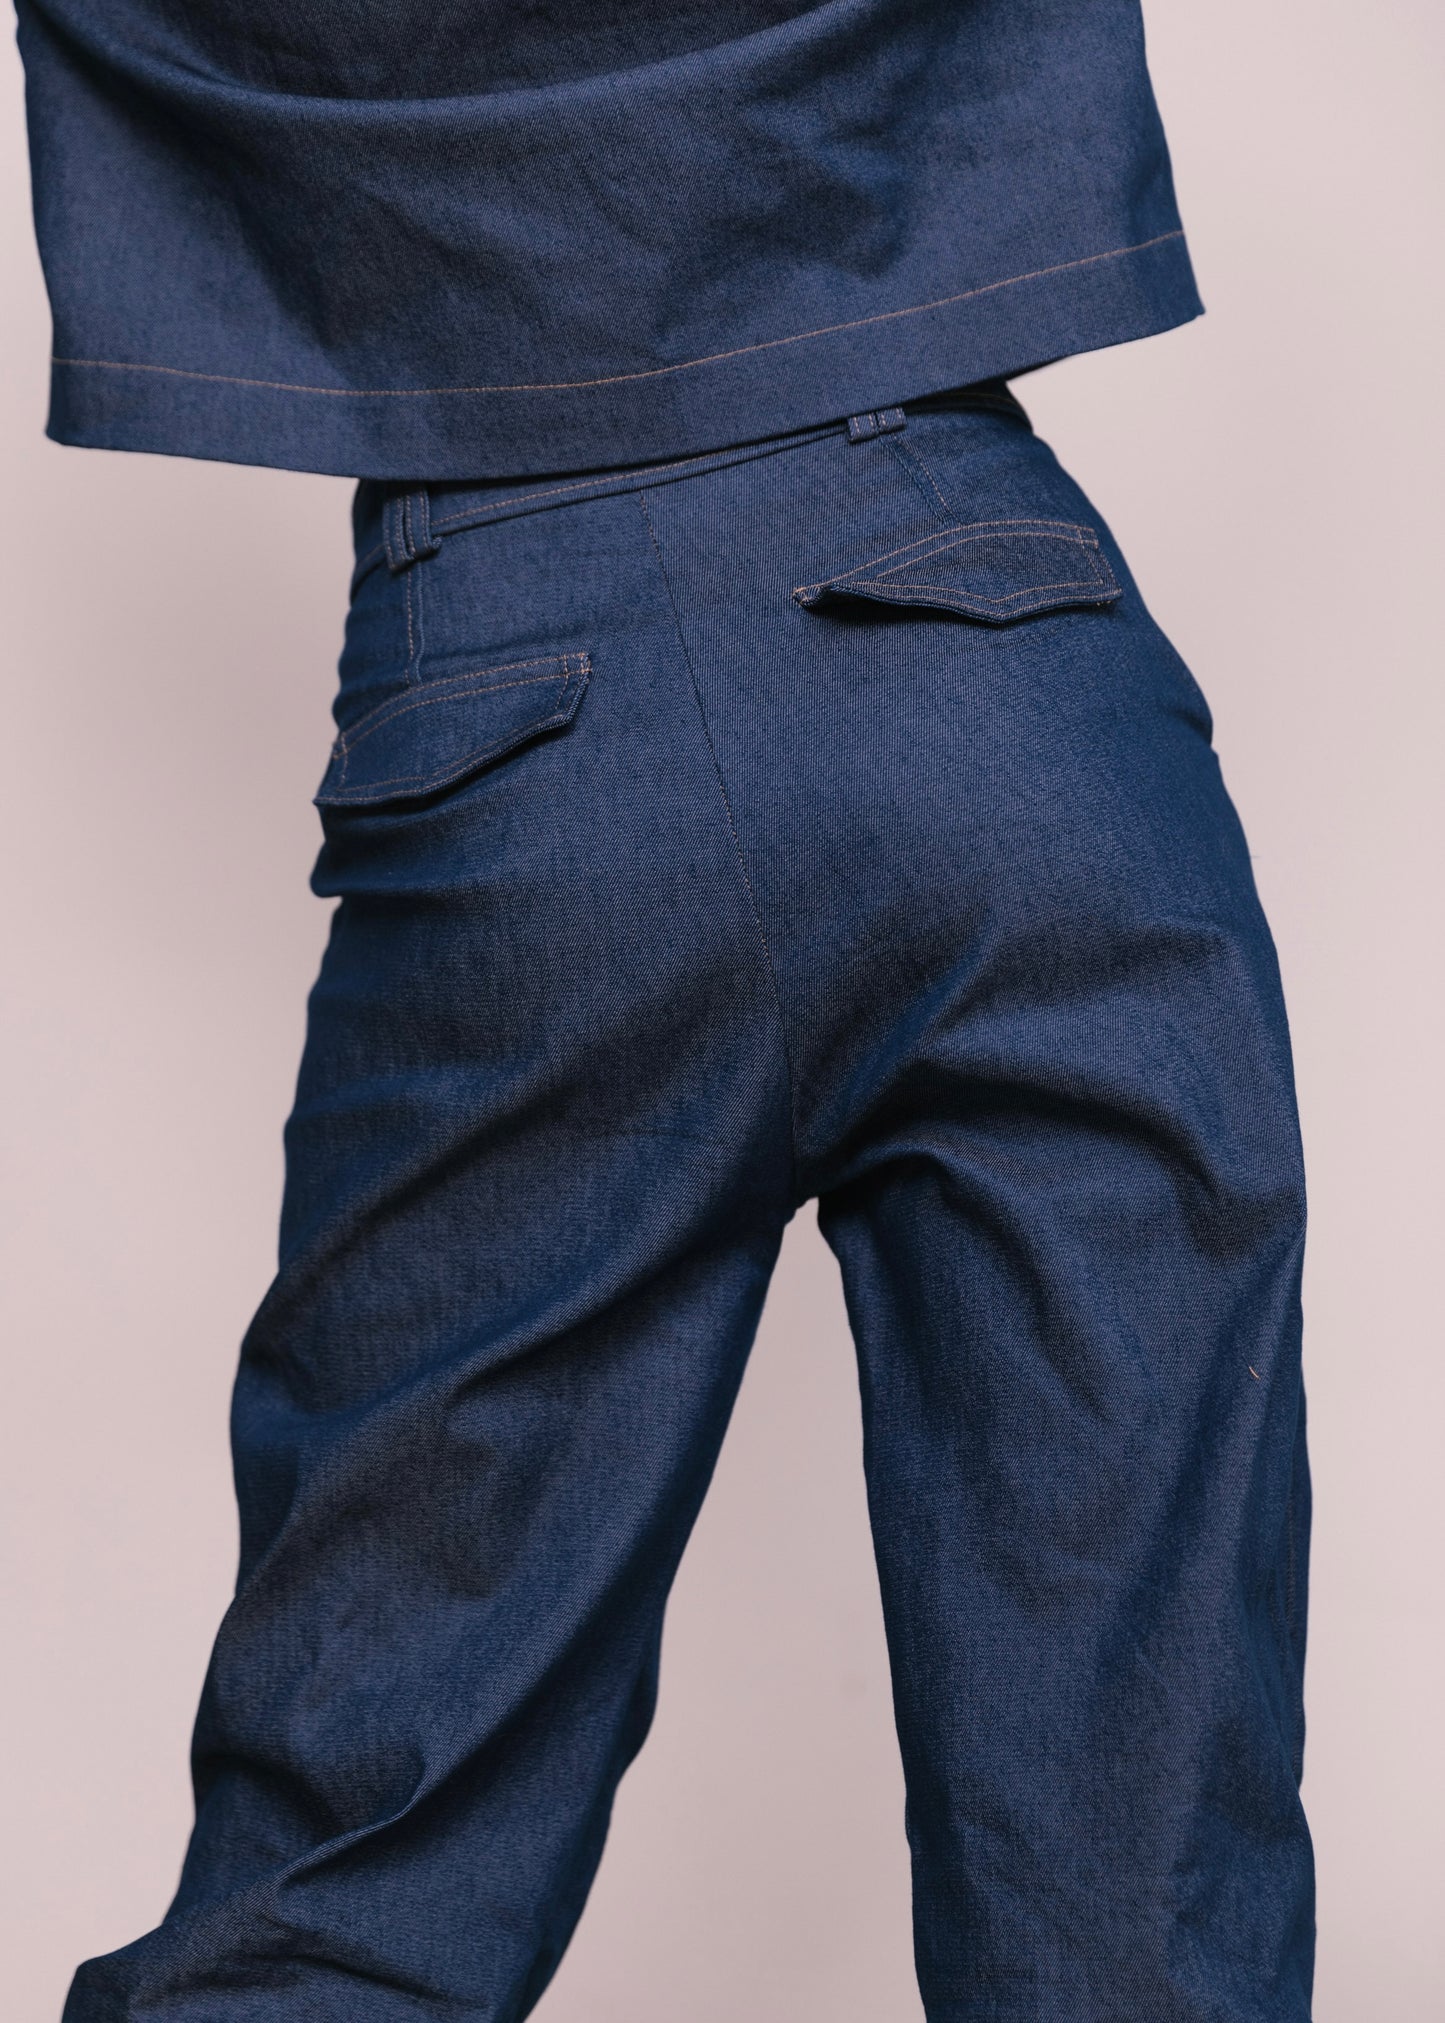 Aliados pants - blue